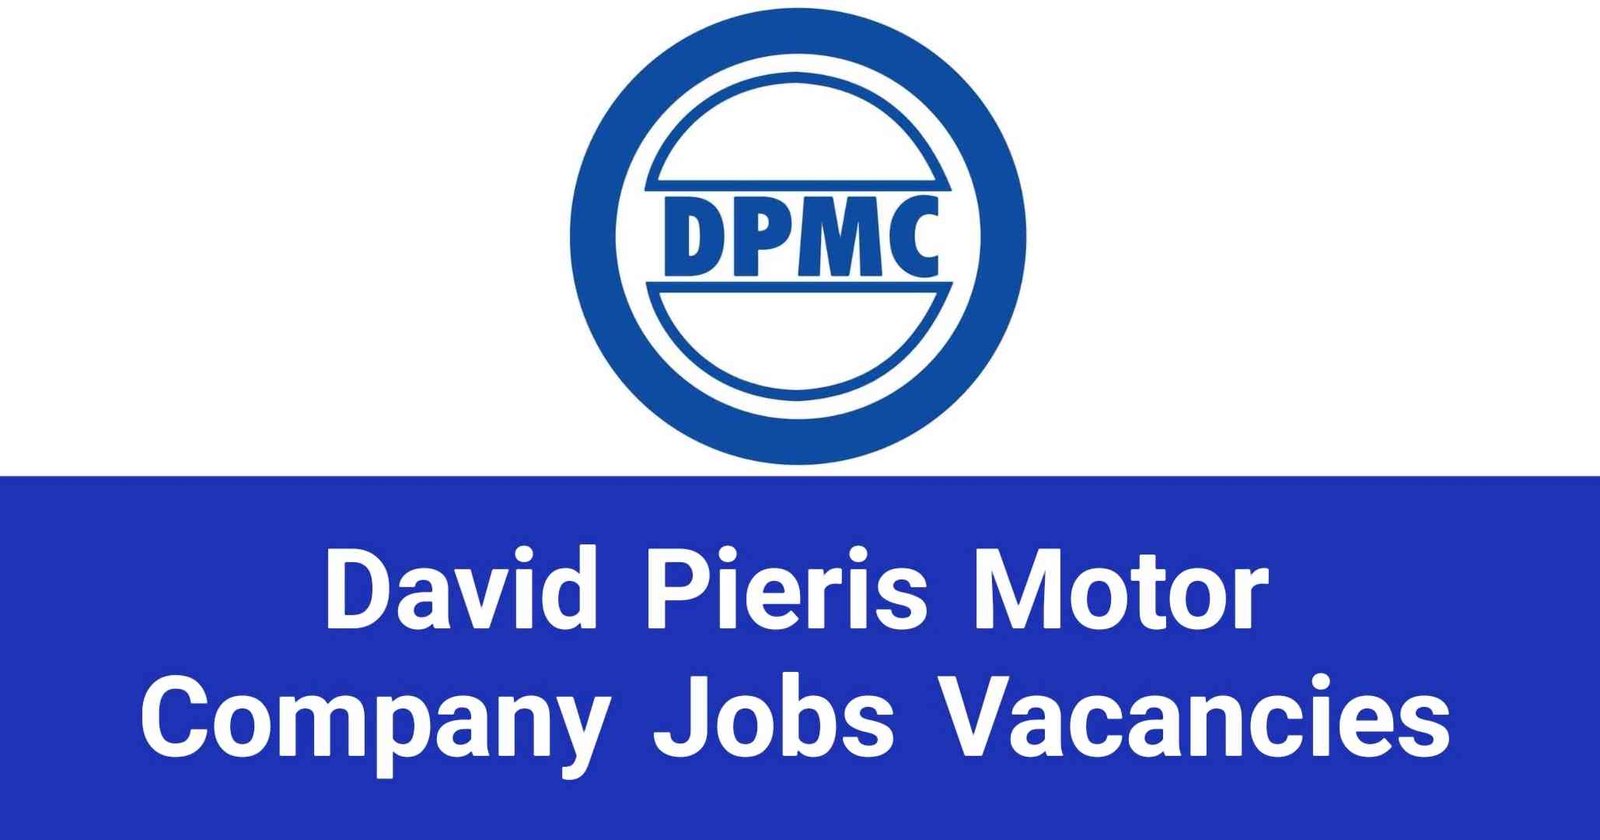 David Pieris Motor Company Jobs Vacancies